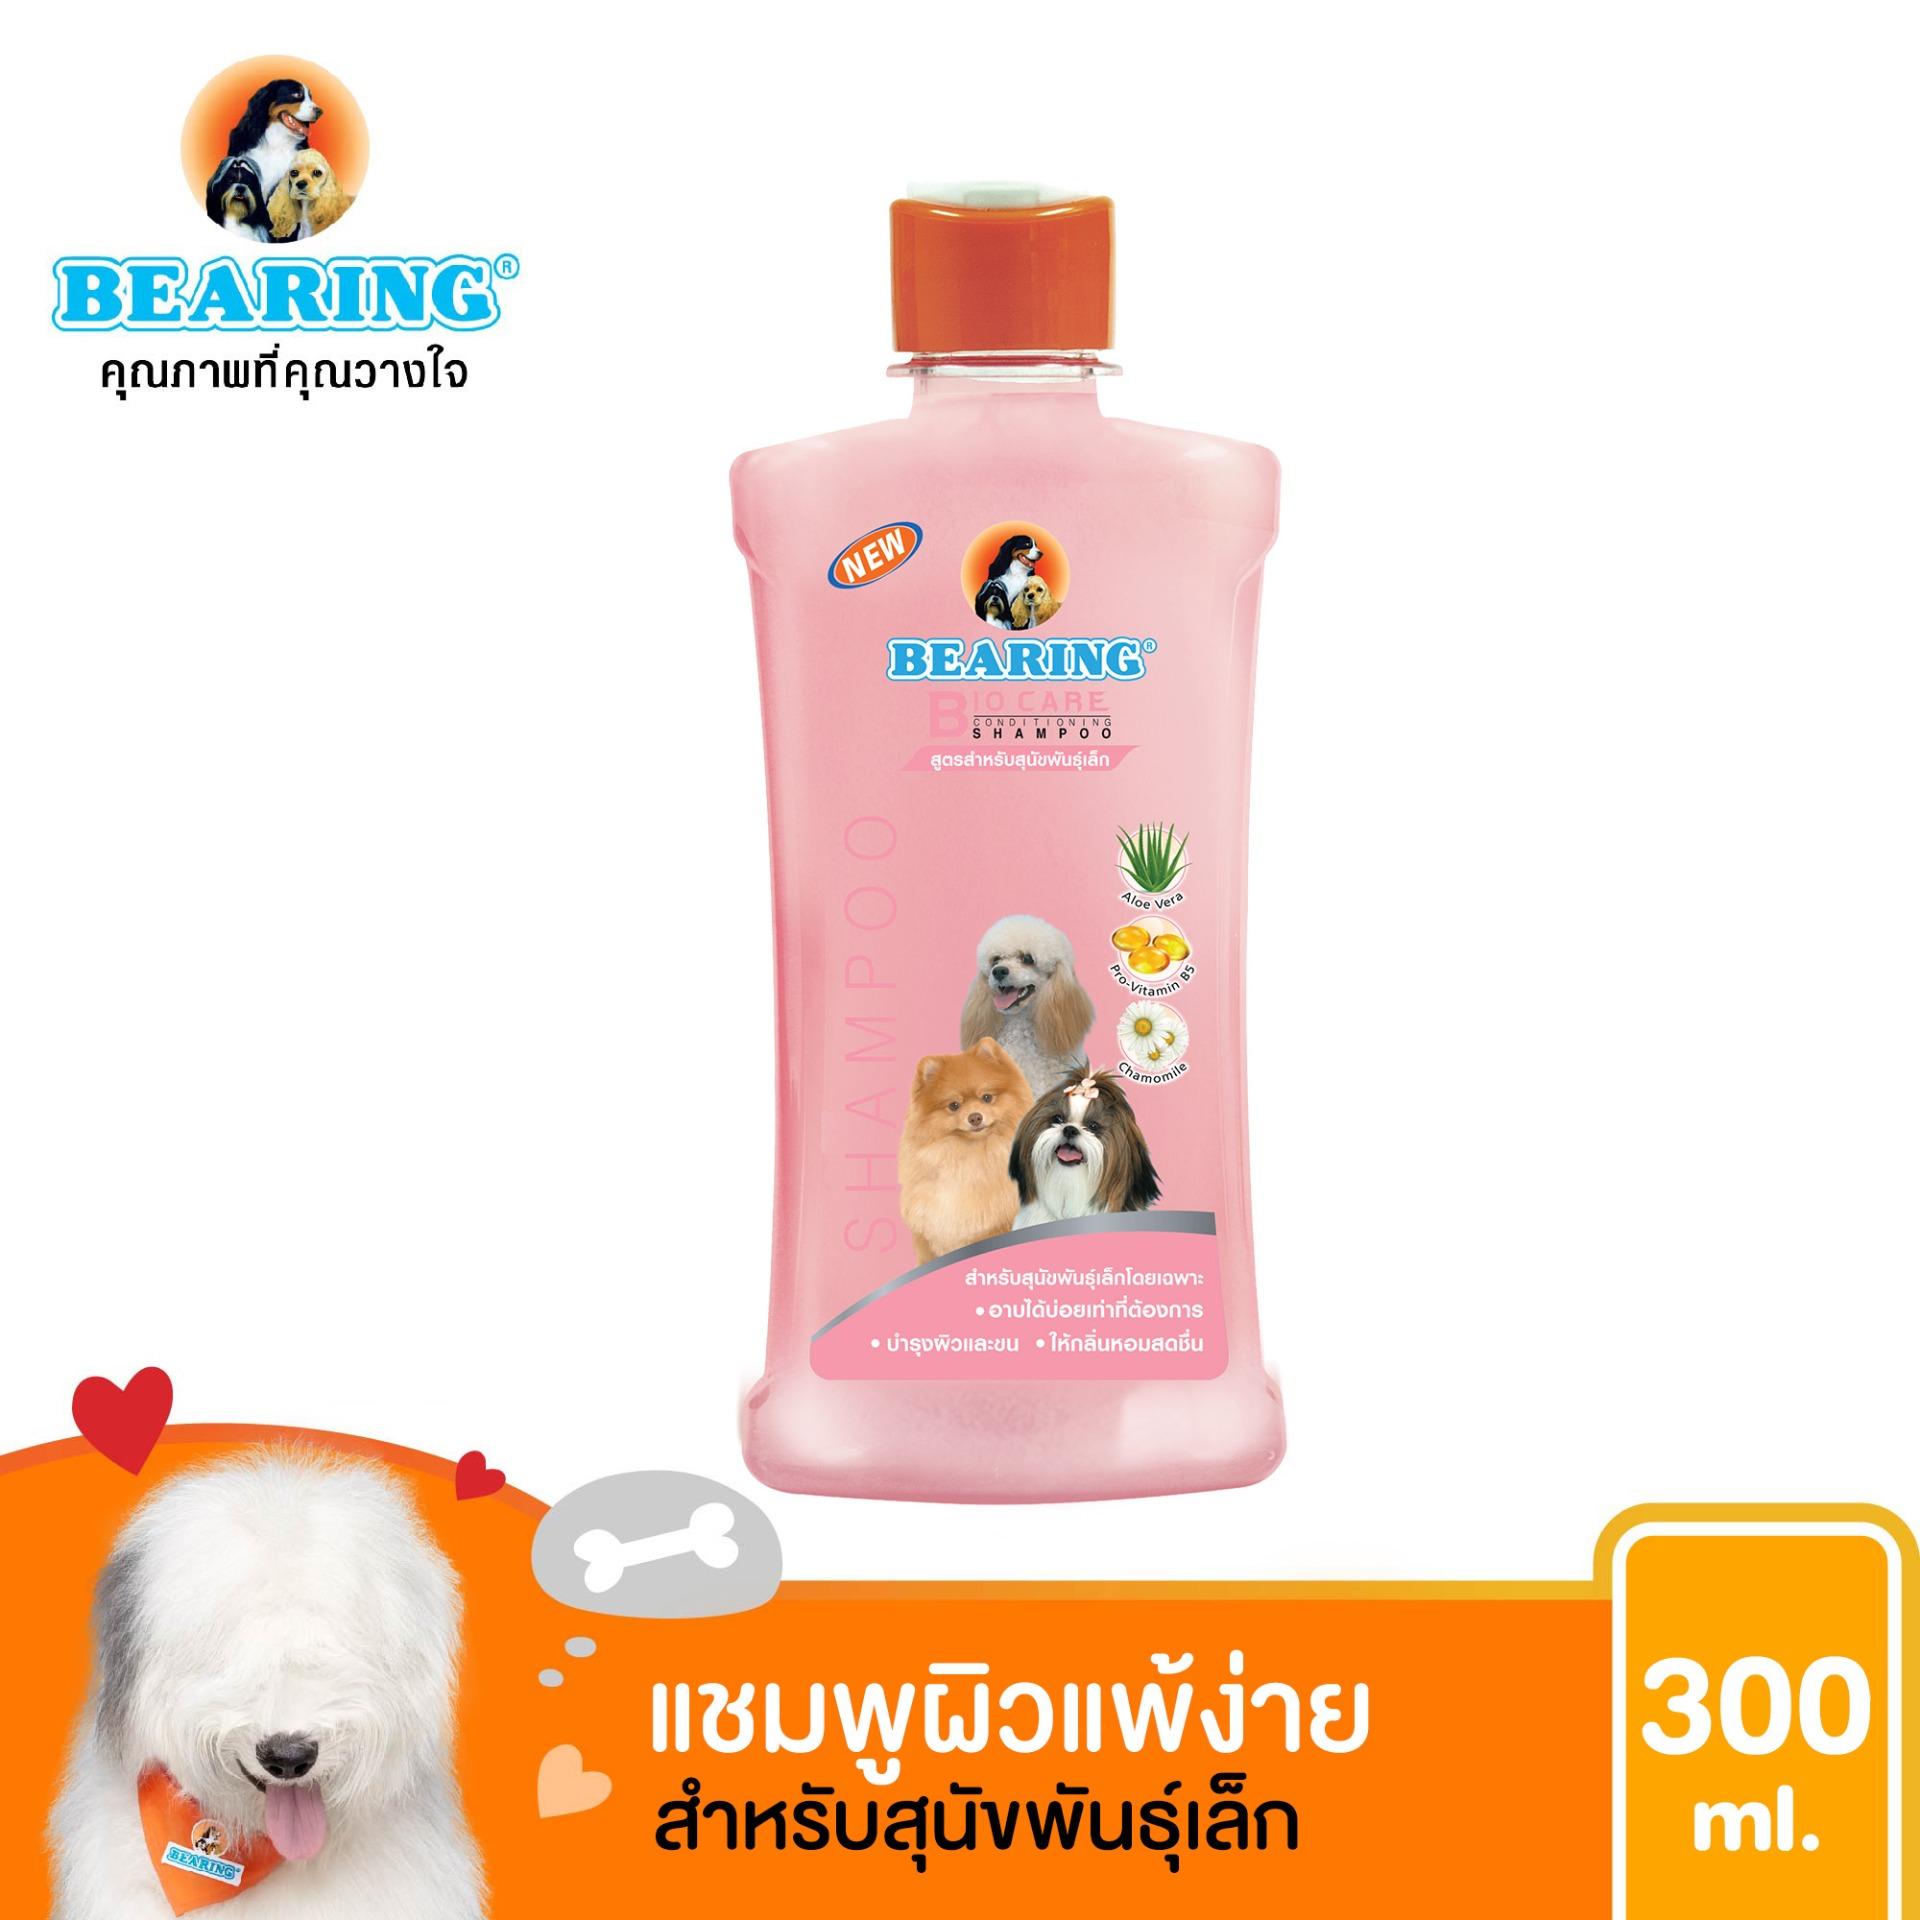 BEARING Bio Care Conditioning Shampoo แชมพูไบโอแคร์ สำหรับสุนัขพันธุ์เล็ก 300 มล. (สีชมพู)